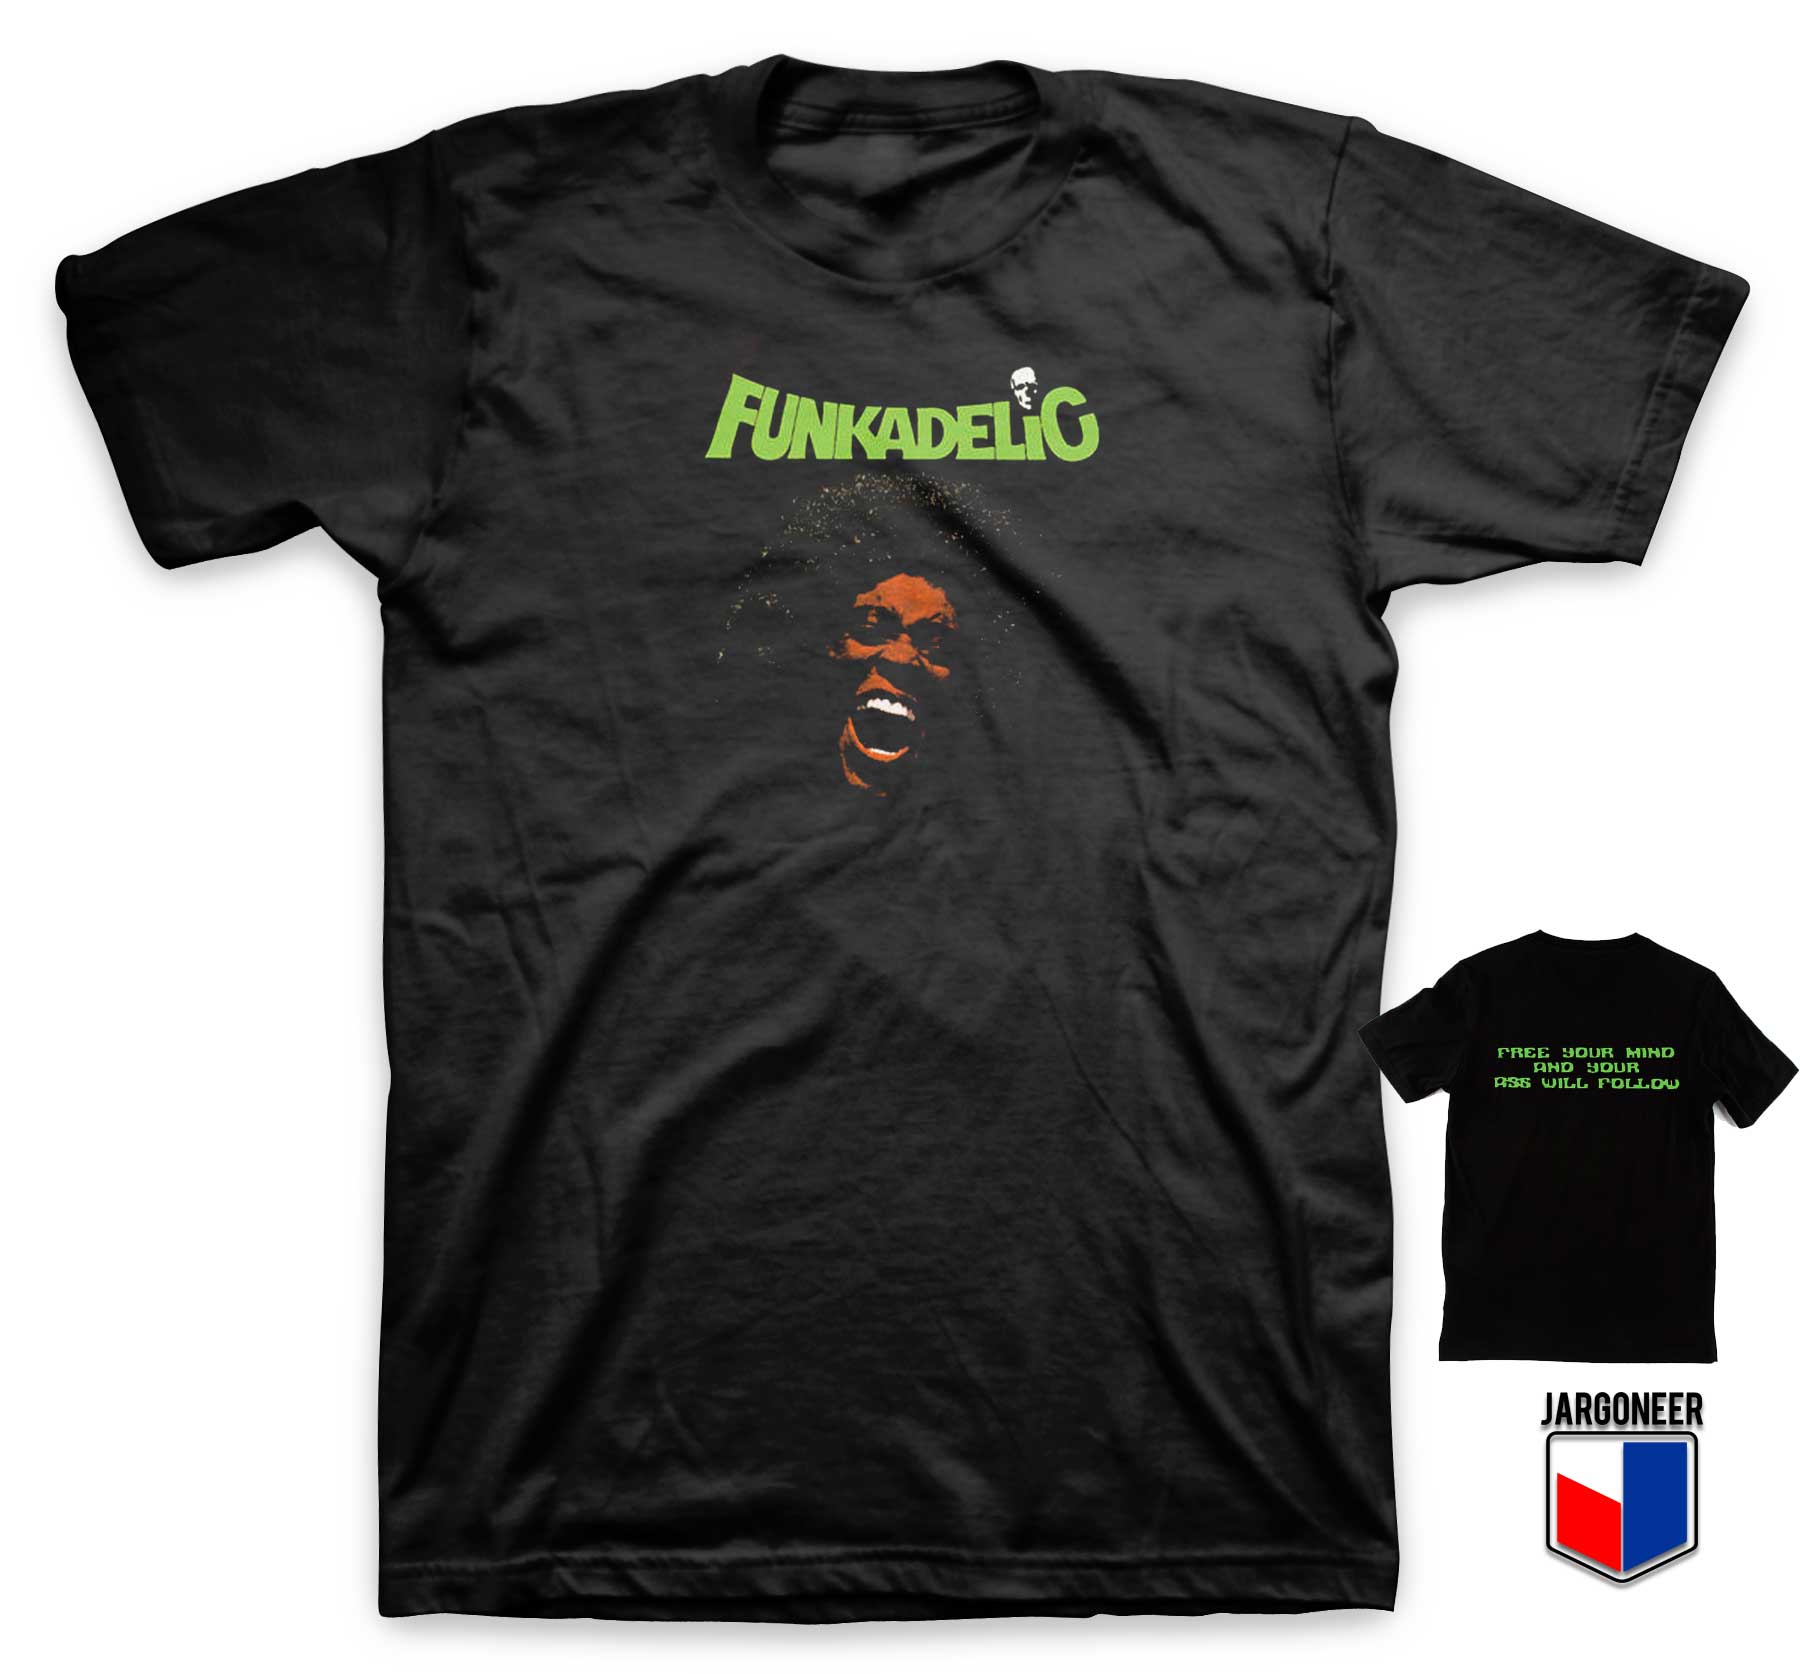 Funkadelic Free Your Mind T Shirt - Shop Unique Graphic Cool Shirt Designs